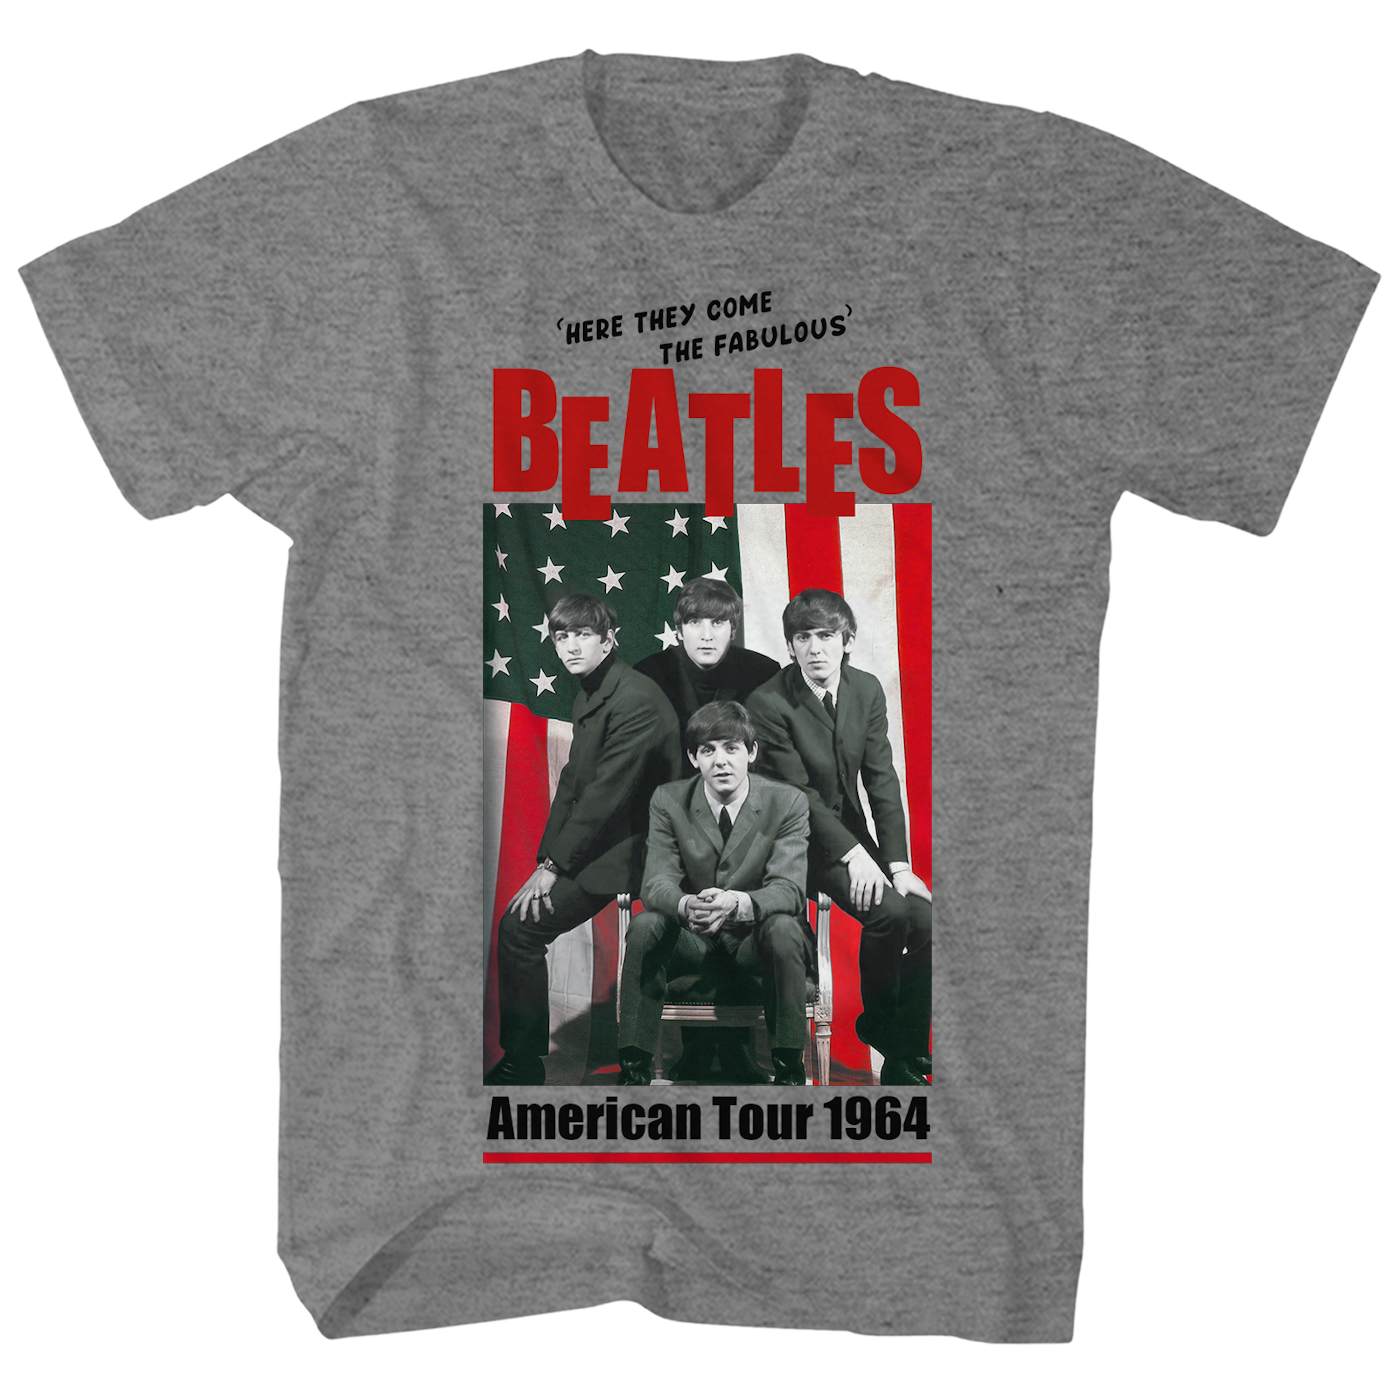 The Beatles T-Shirt | American Tour 1964 Title Shirt (Reissue)